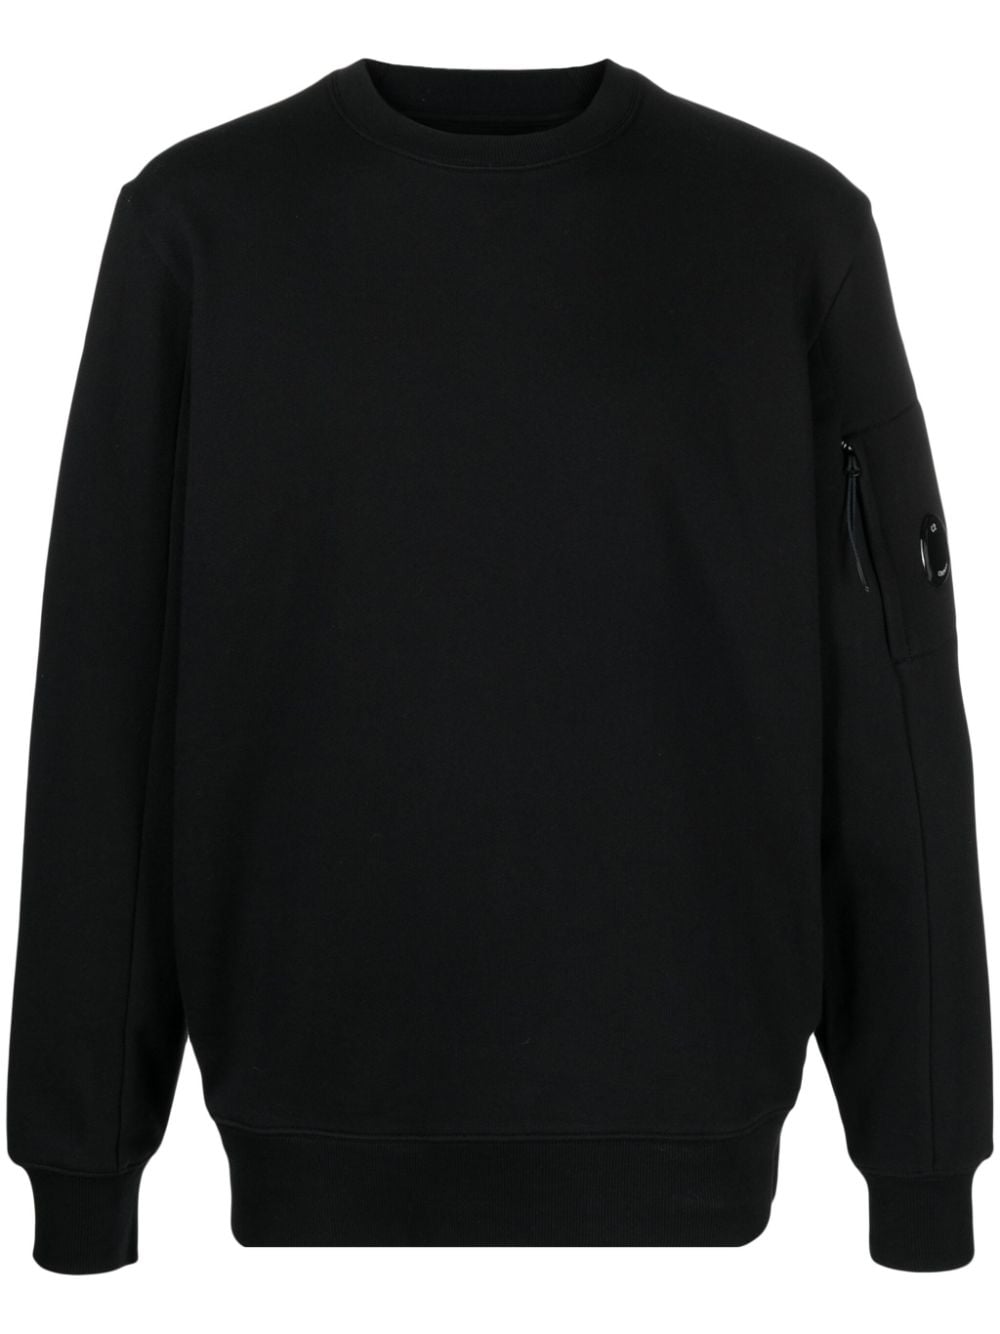 Black crewneck sweatshirt